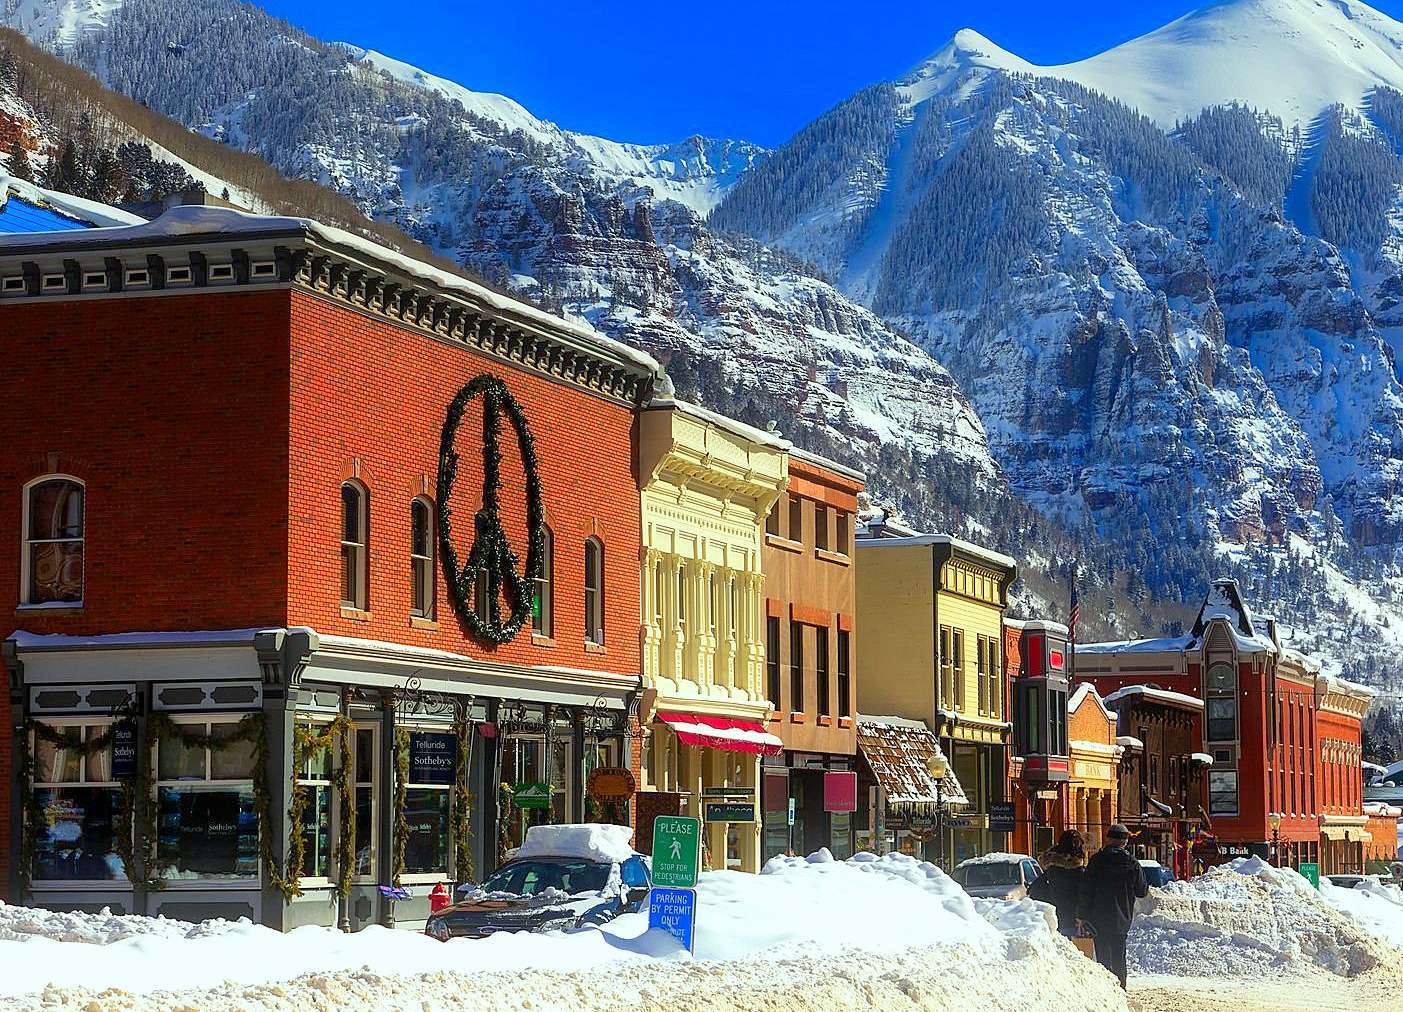 The ski town of Telluride Colorado online puzzle